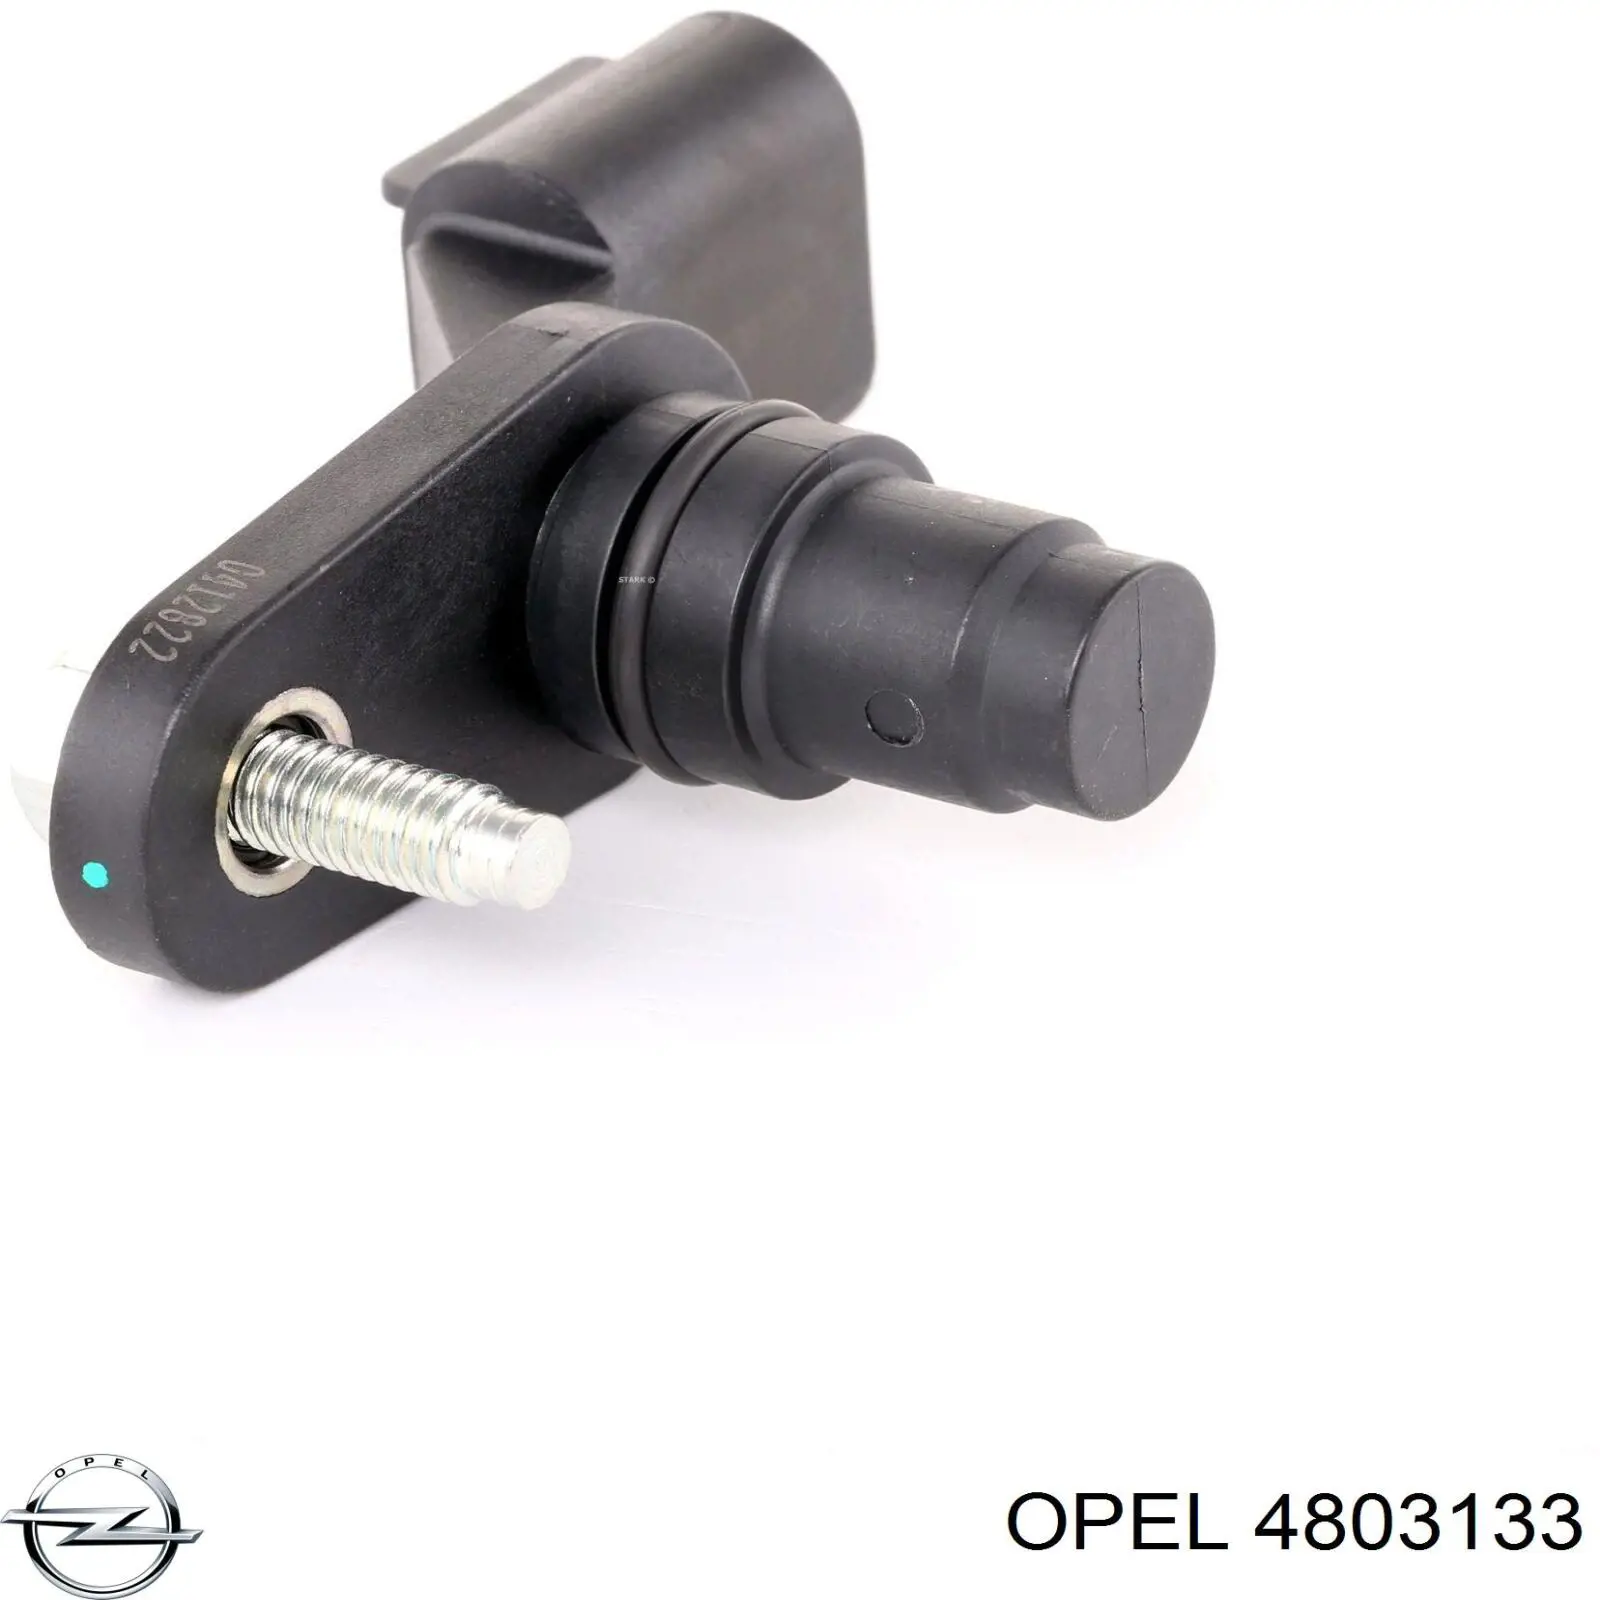 4803133 Opel sensor de arbol de levas